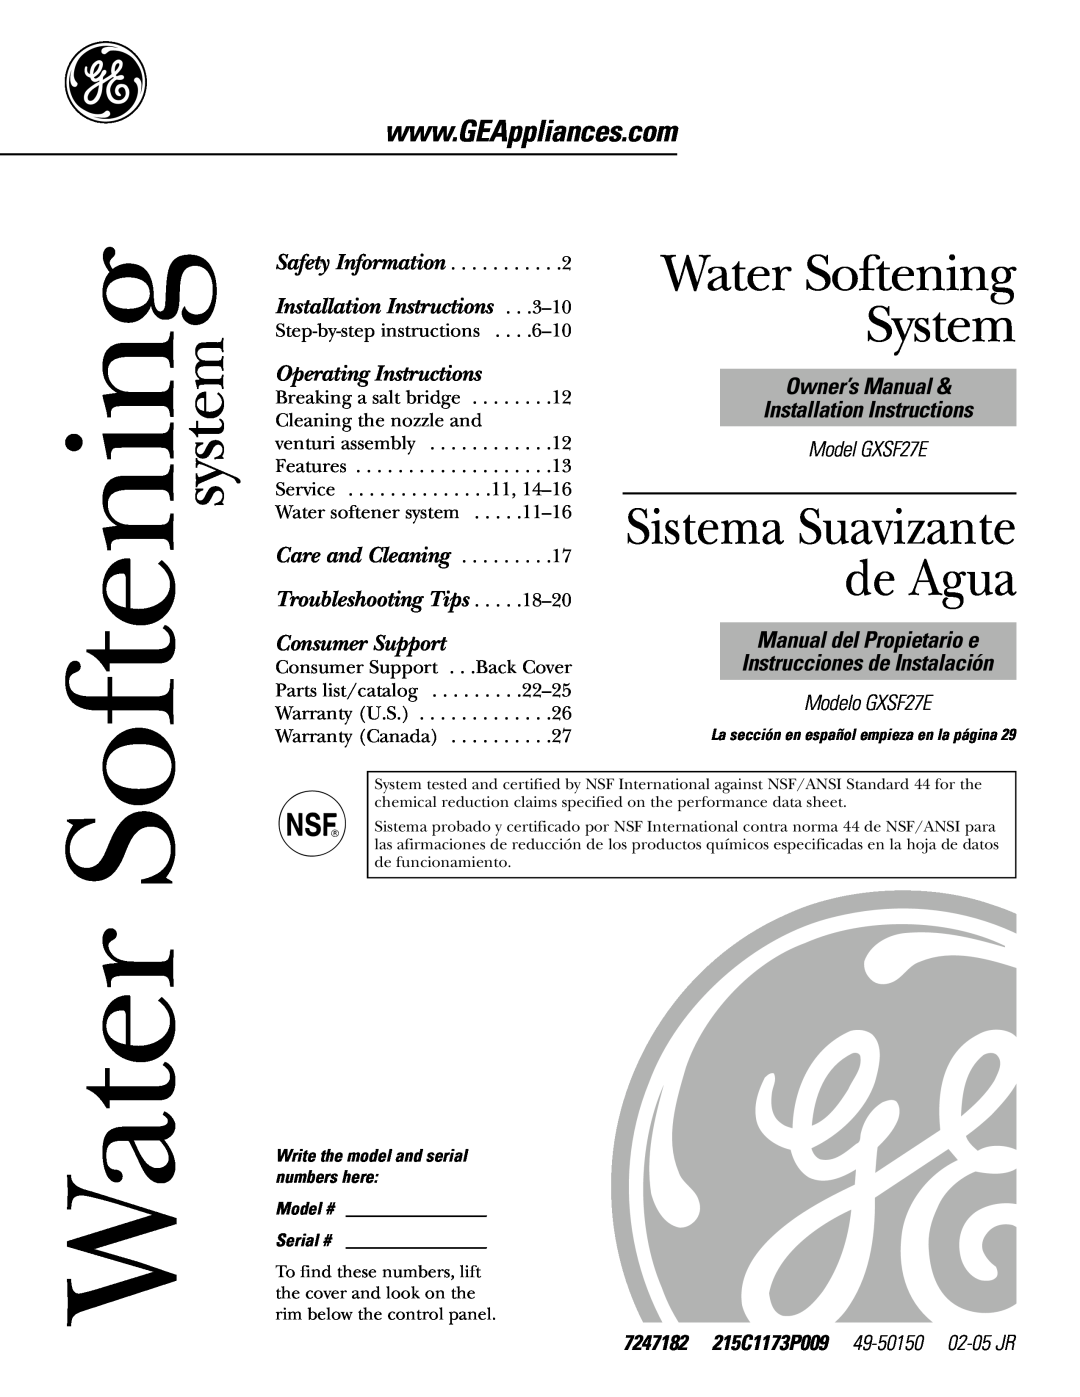 GE GXSF27E manual Water Softening System, Sistema Suavizante de Agua, Softening system, Operating Instructions 